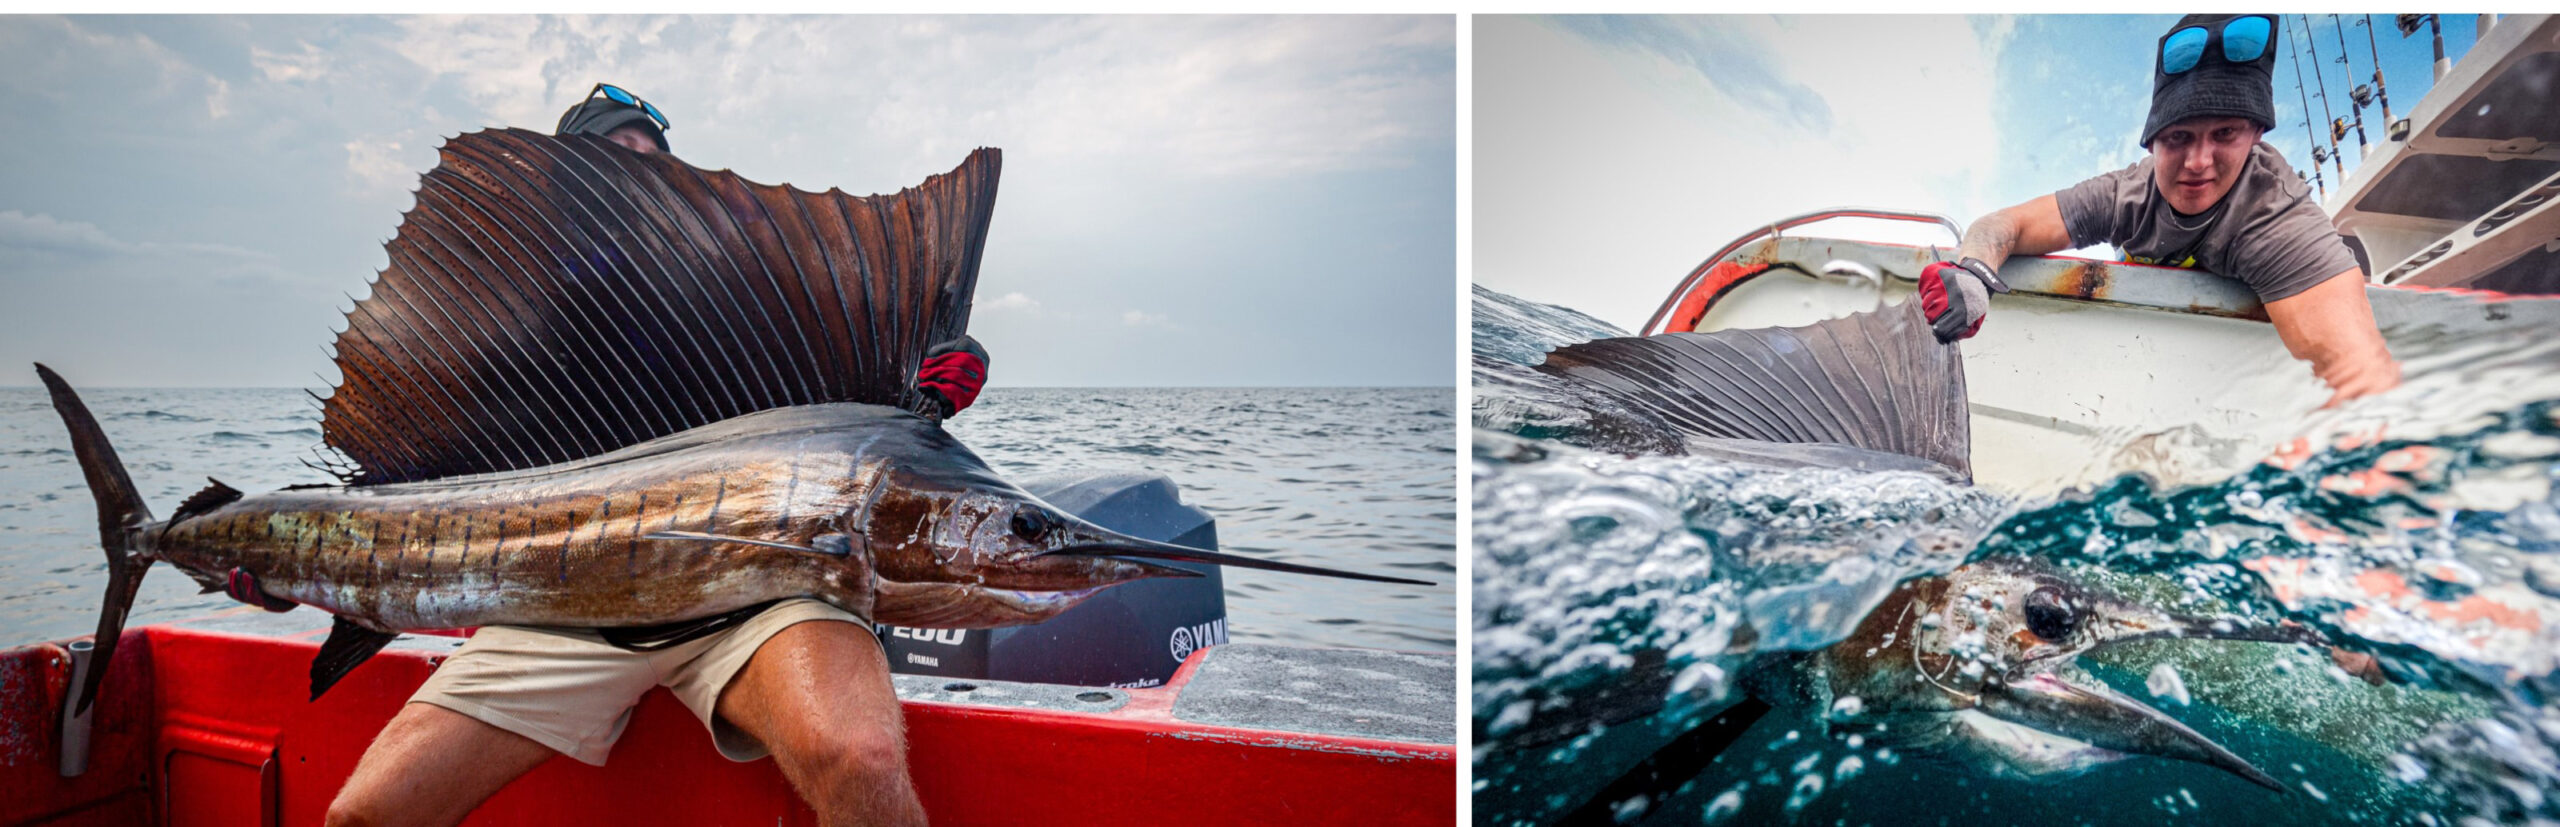 malaysia kualarompin sailfish collage3 3200 1 scaled fishing tour malaysia